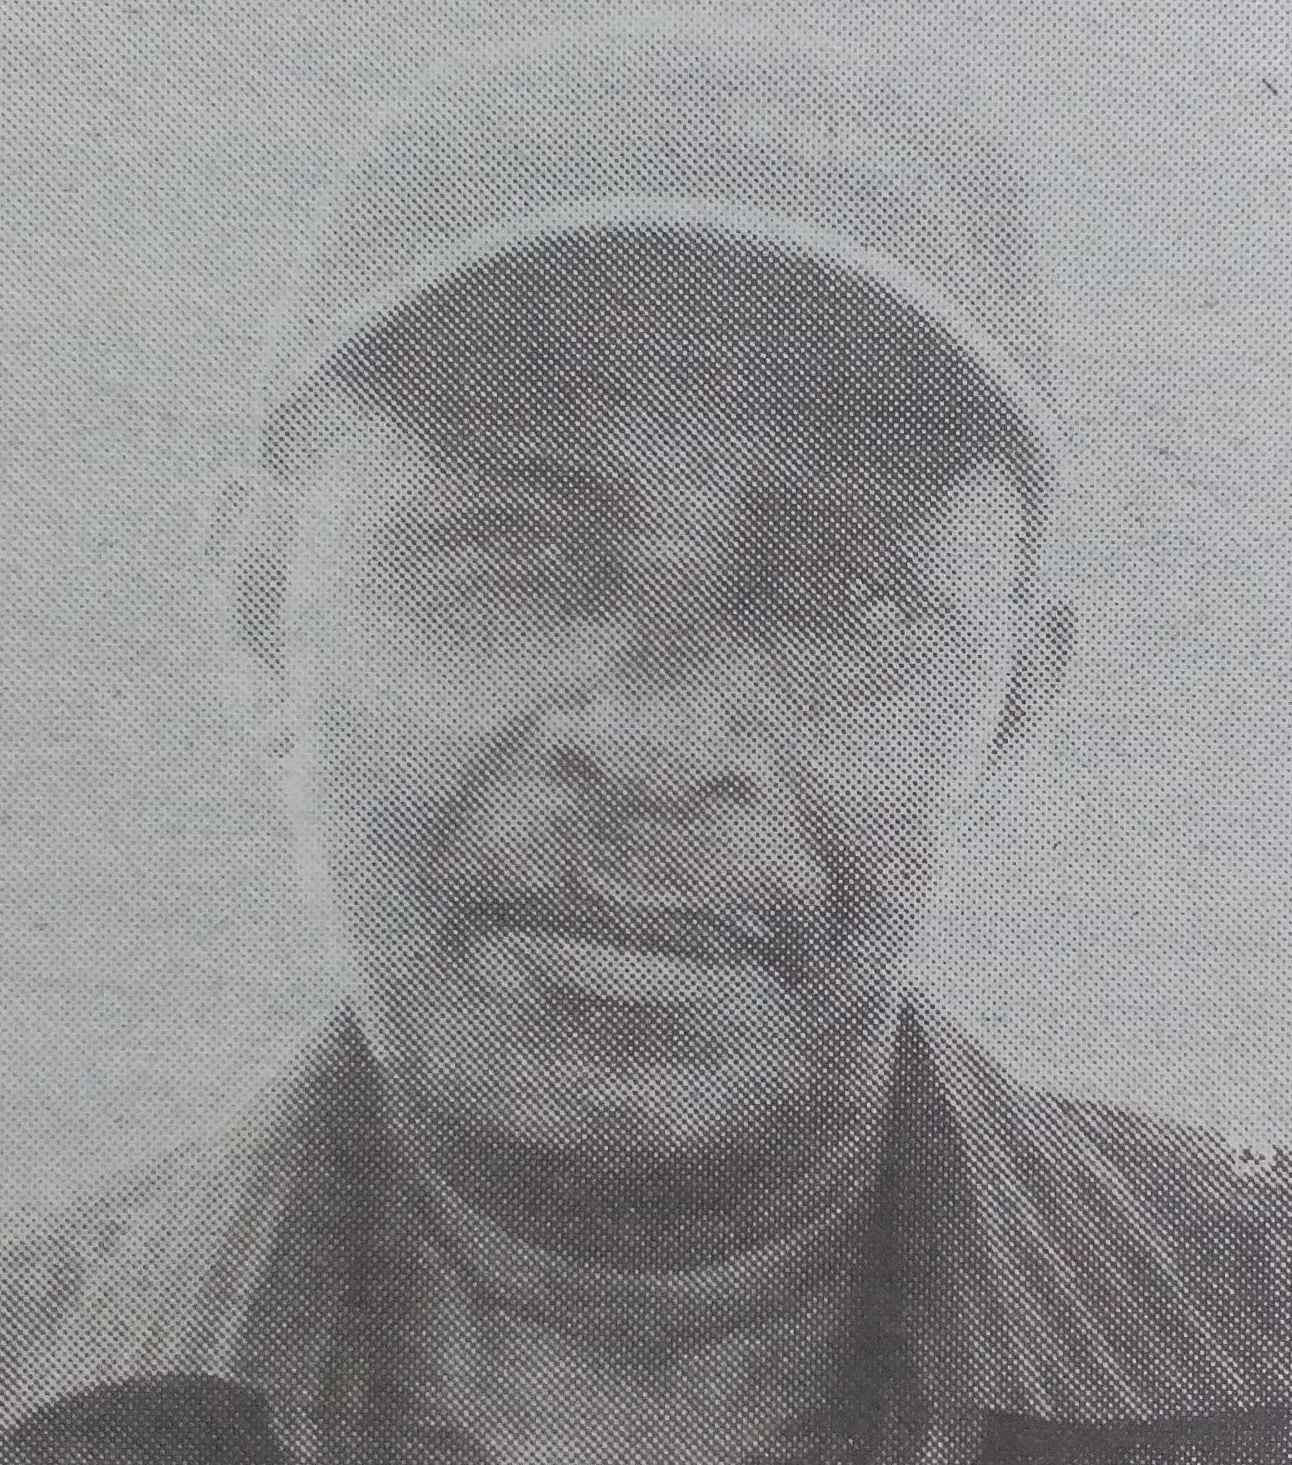 Obituary Image of David Mulaa Nzila